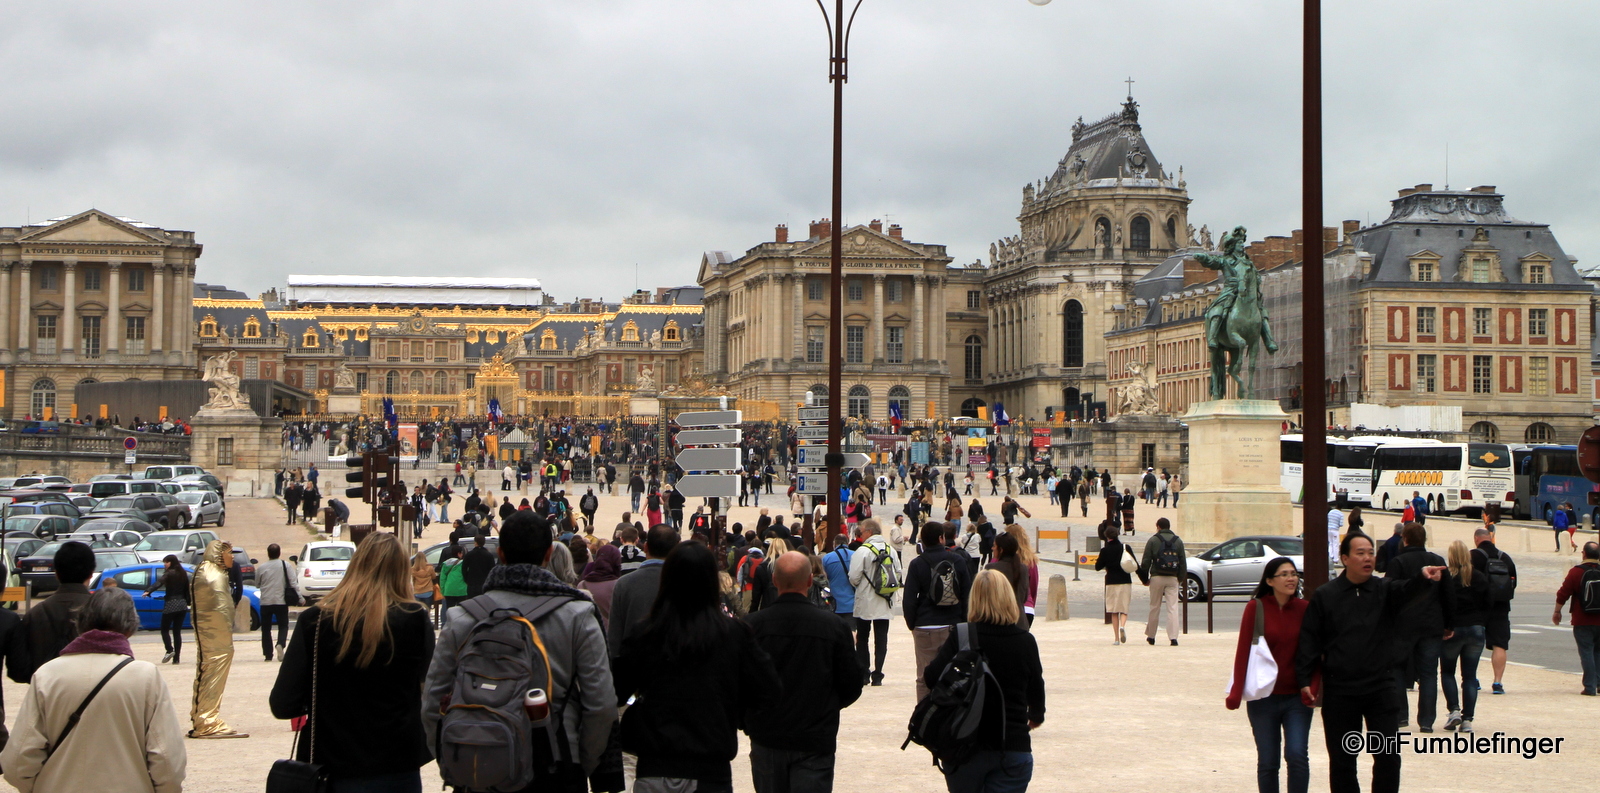 Throngs of people arriving at Versailles